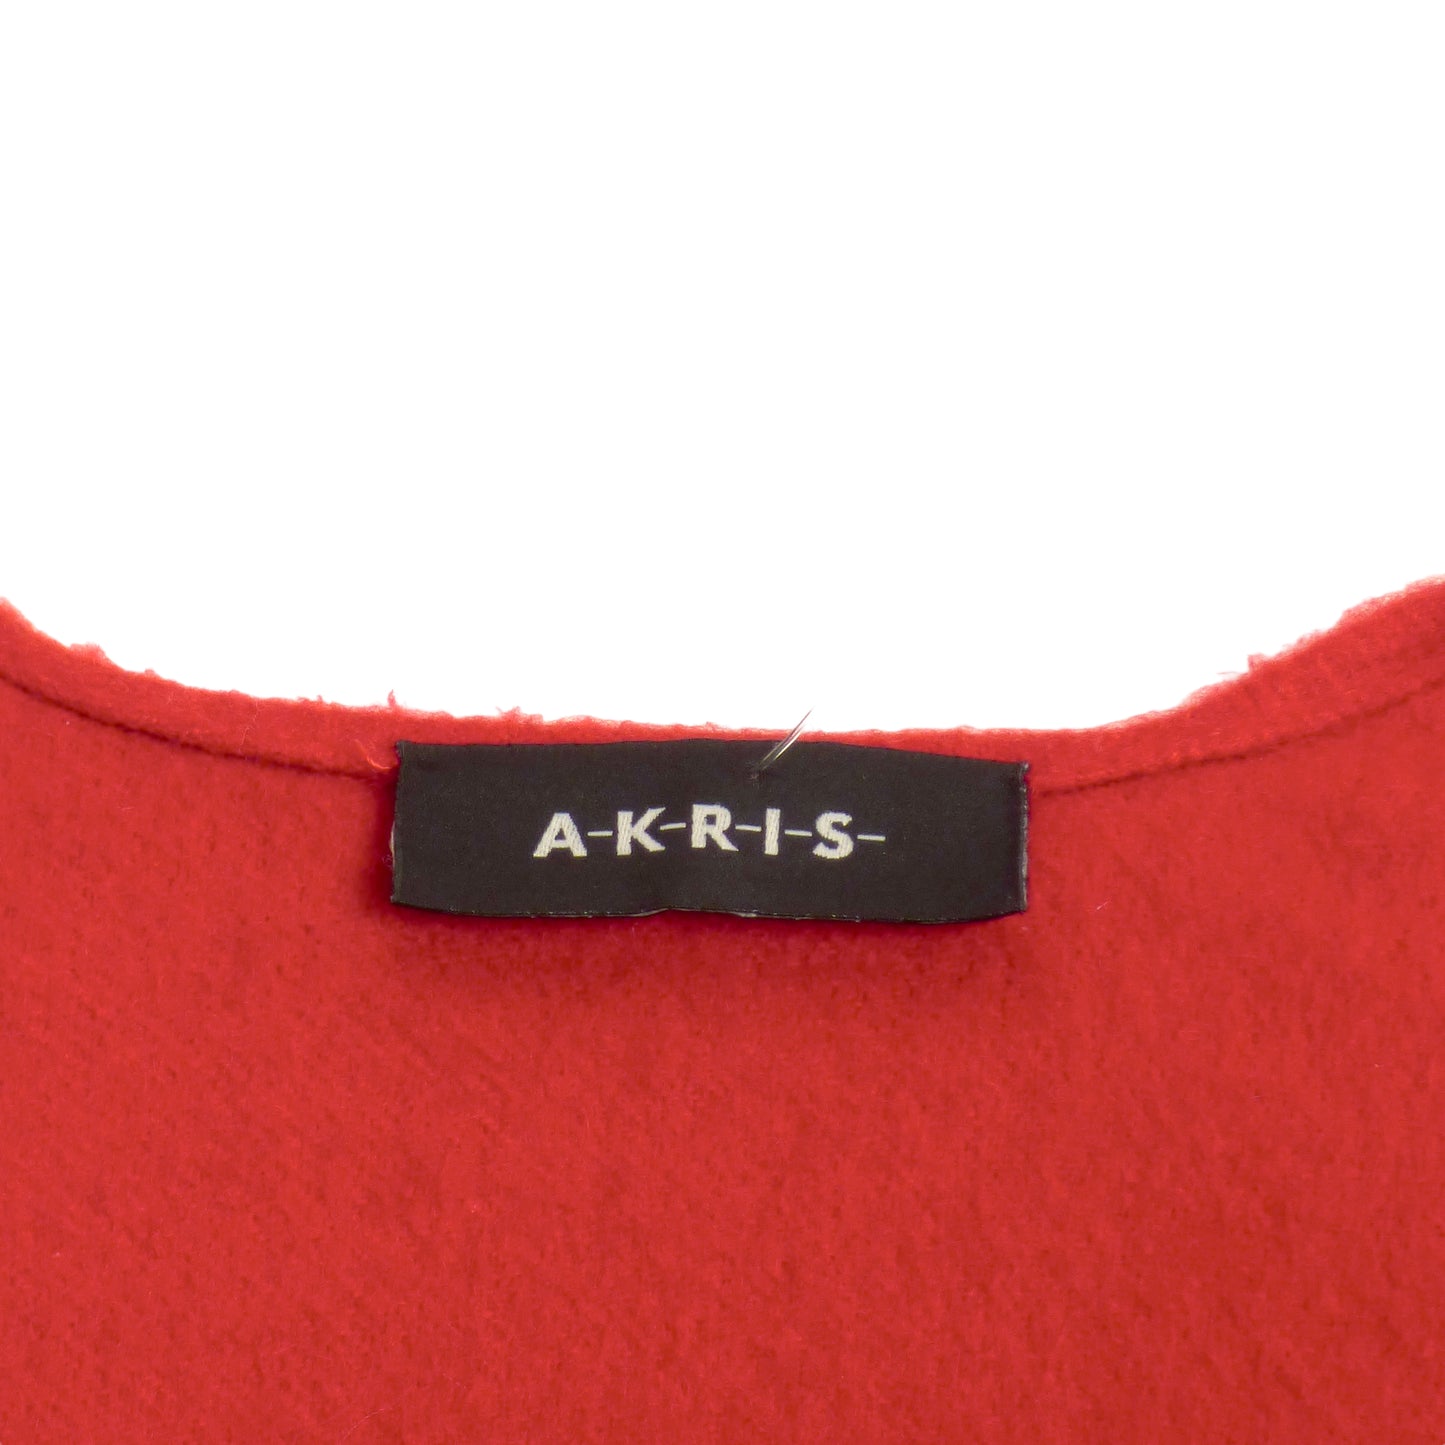 AKRIS- Red Cashmere Shawl, One Size